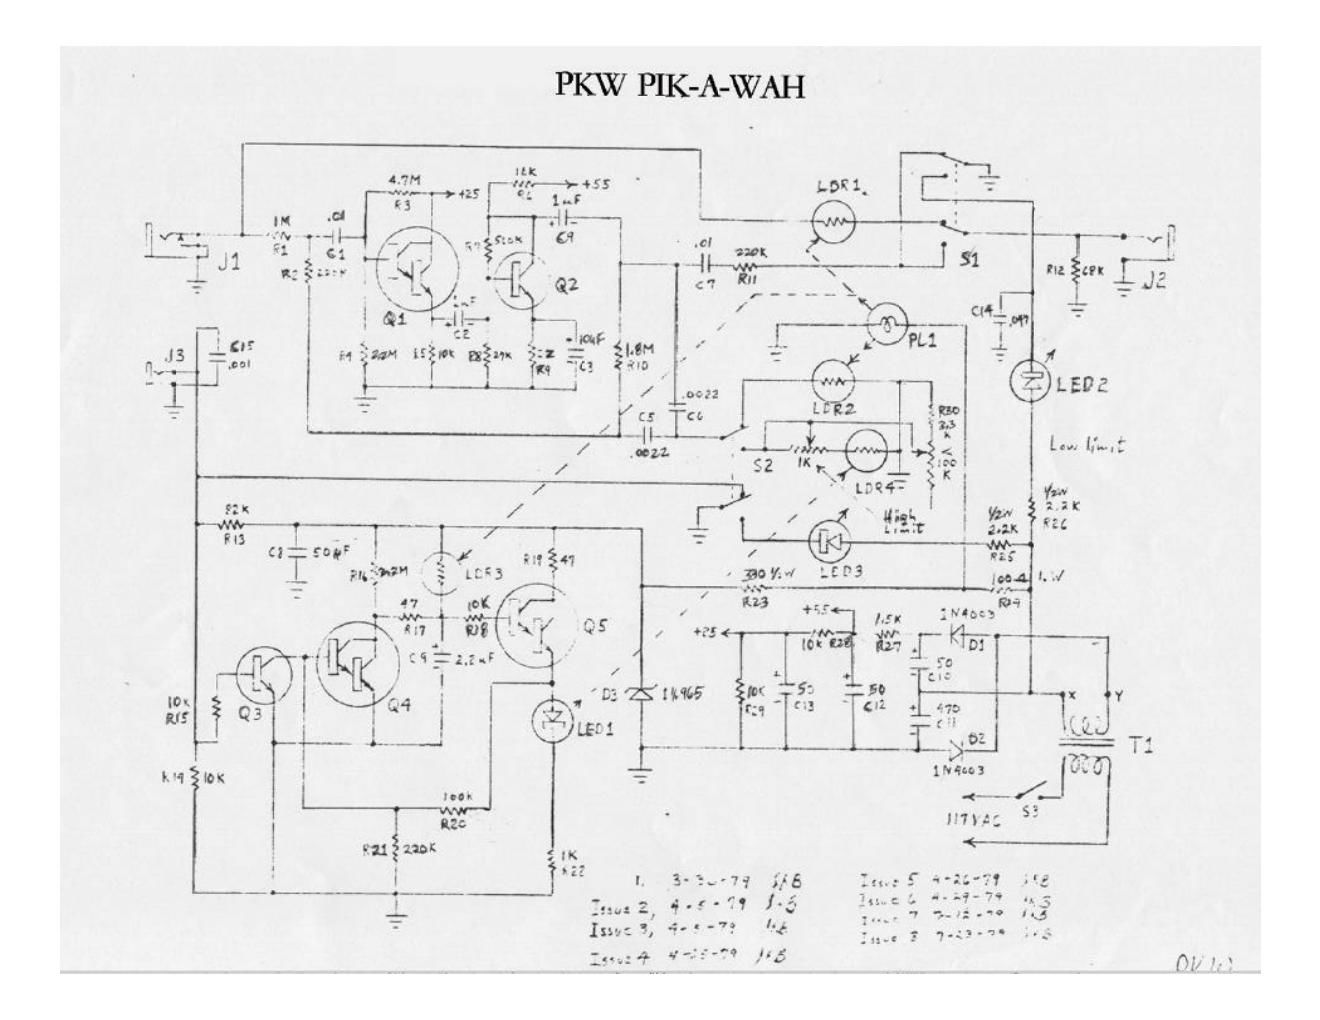 Morley PKW Pikawah Schematic